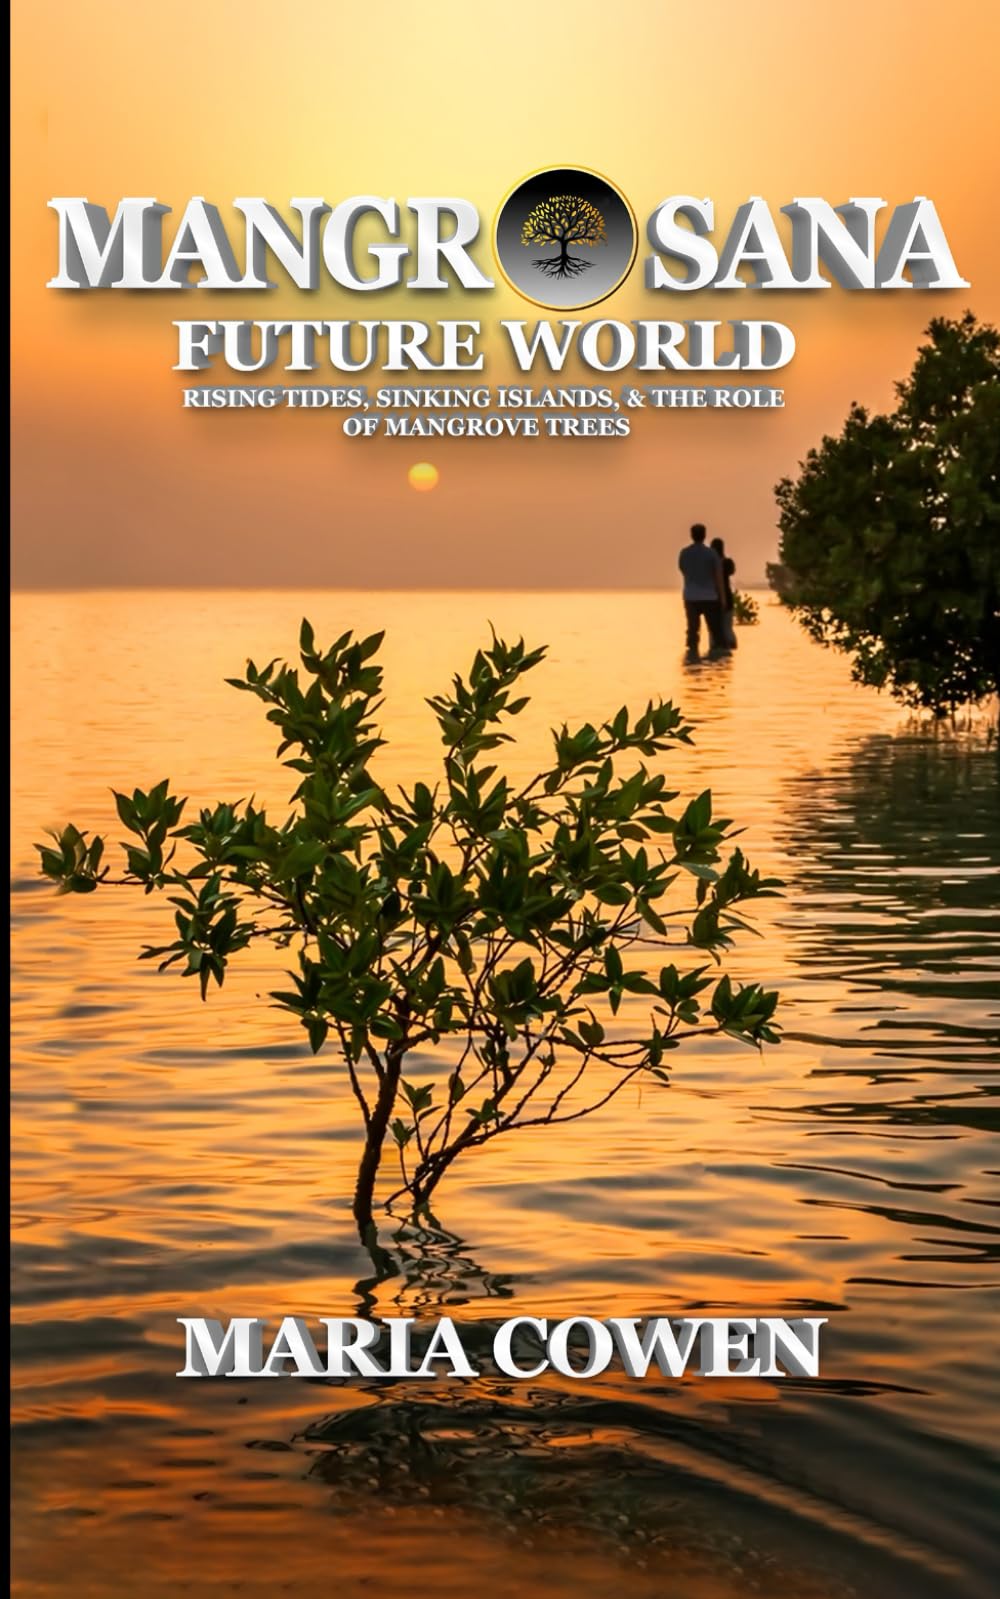 MangrOsana: Future World; Rising Tides, Sinking Islands & the Role of Mangrove Trees